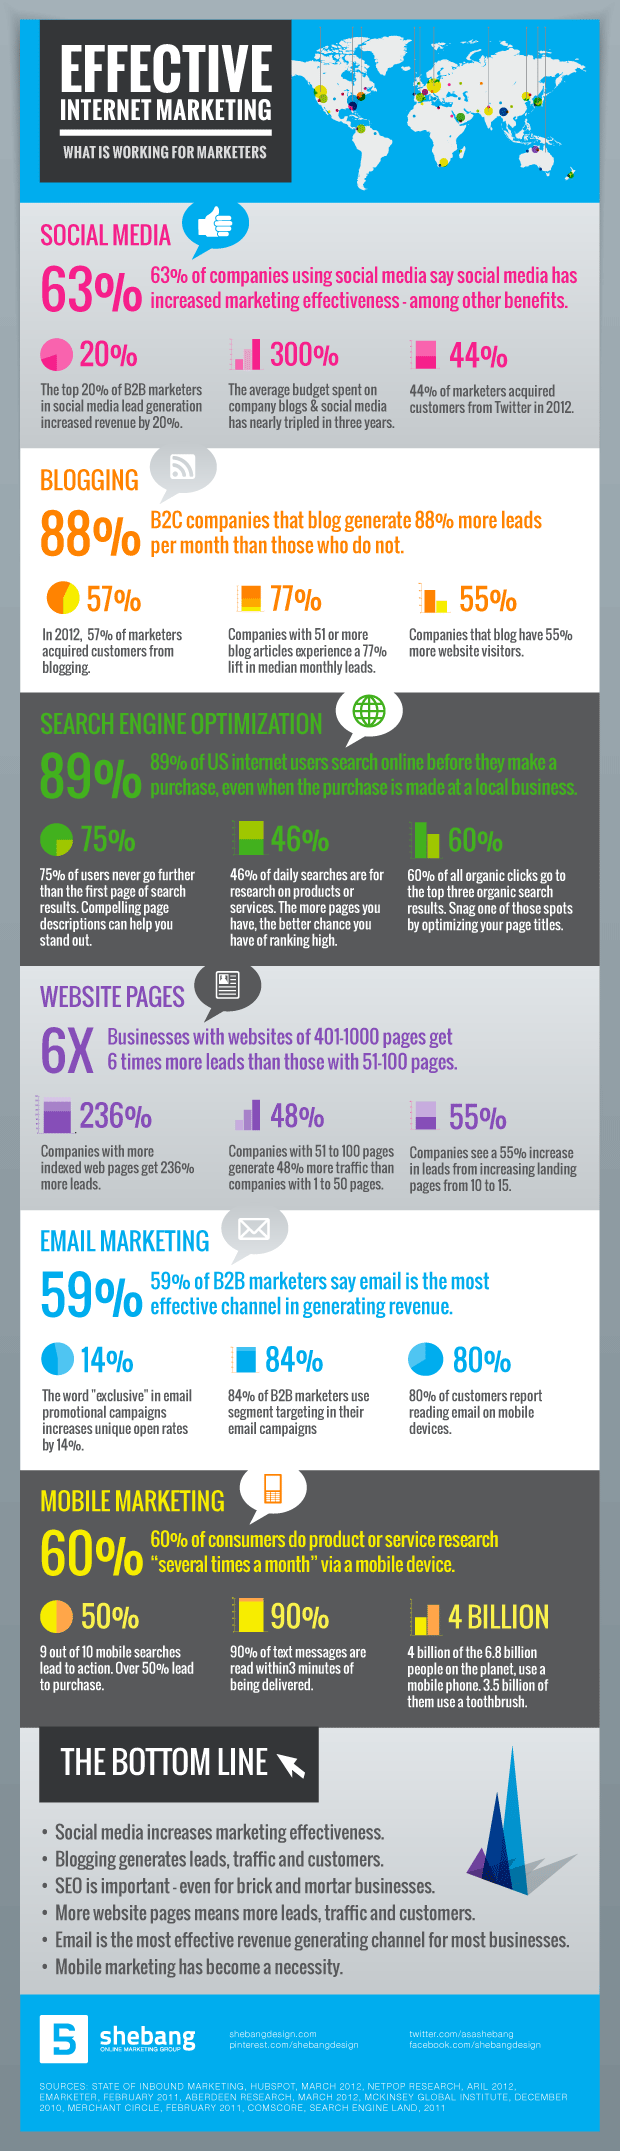 effective-internet-marketing-2013-infographic